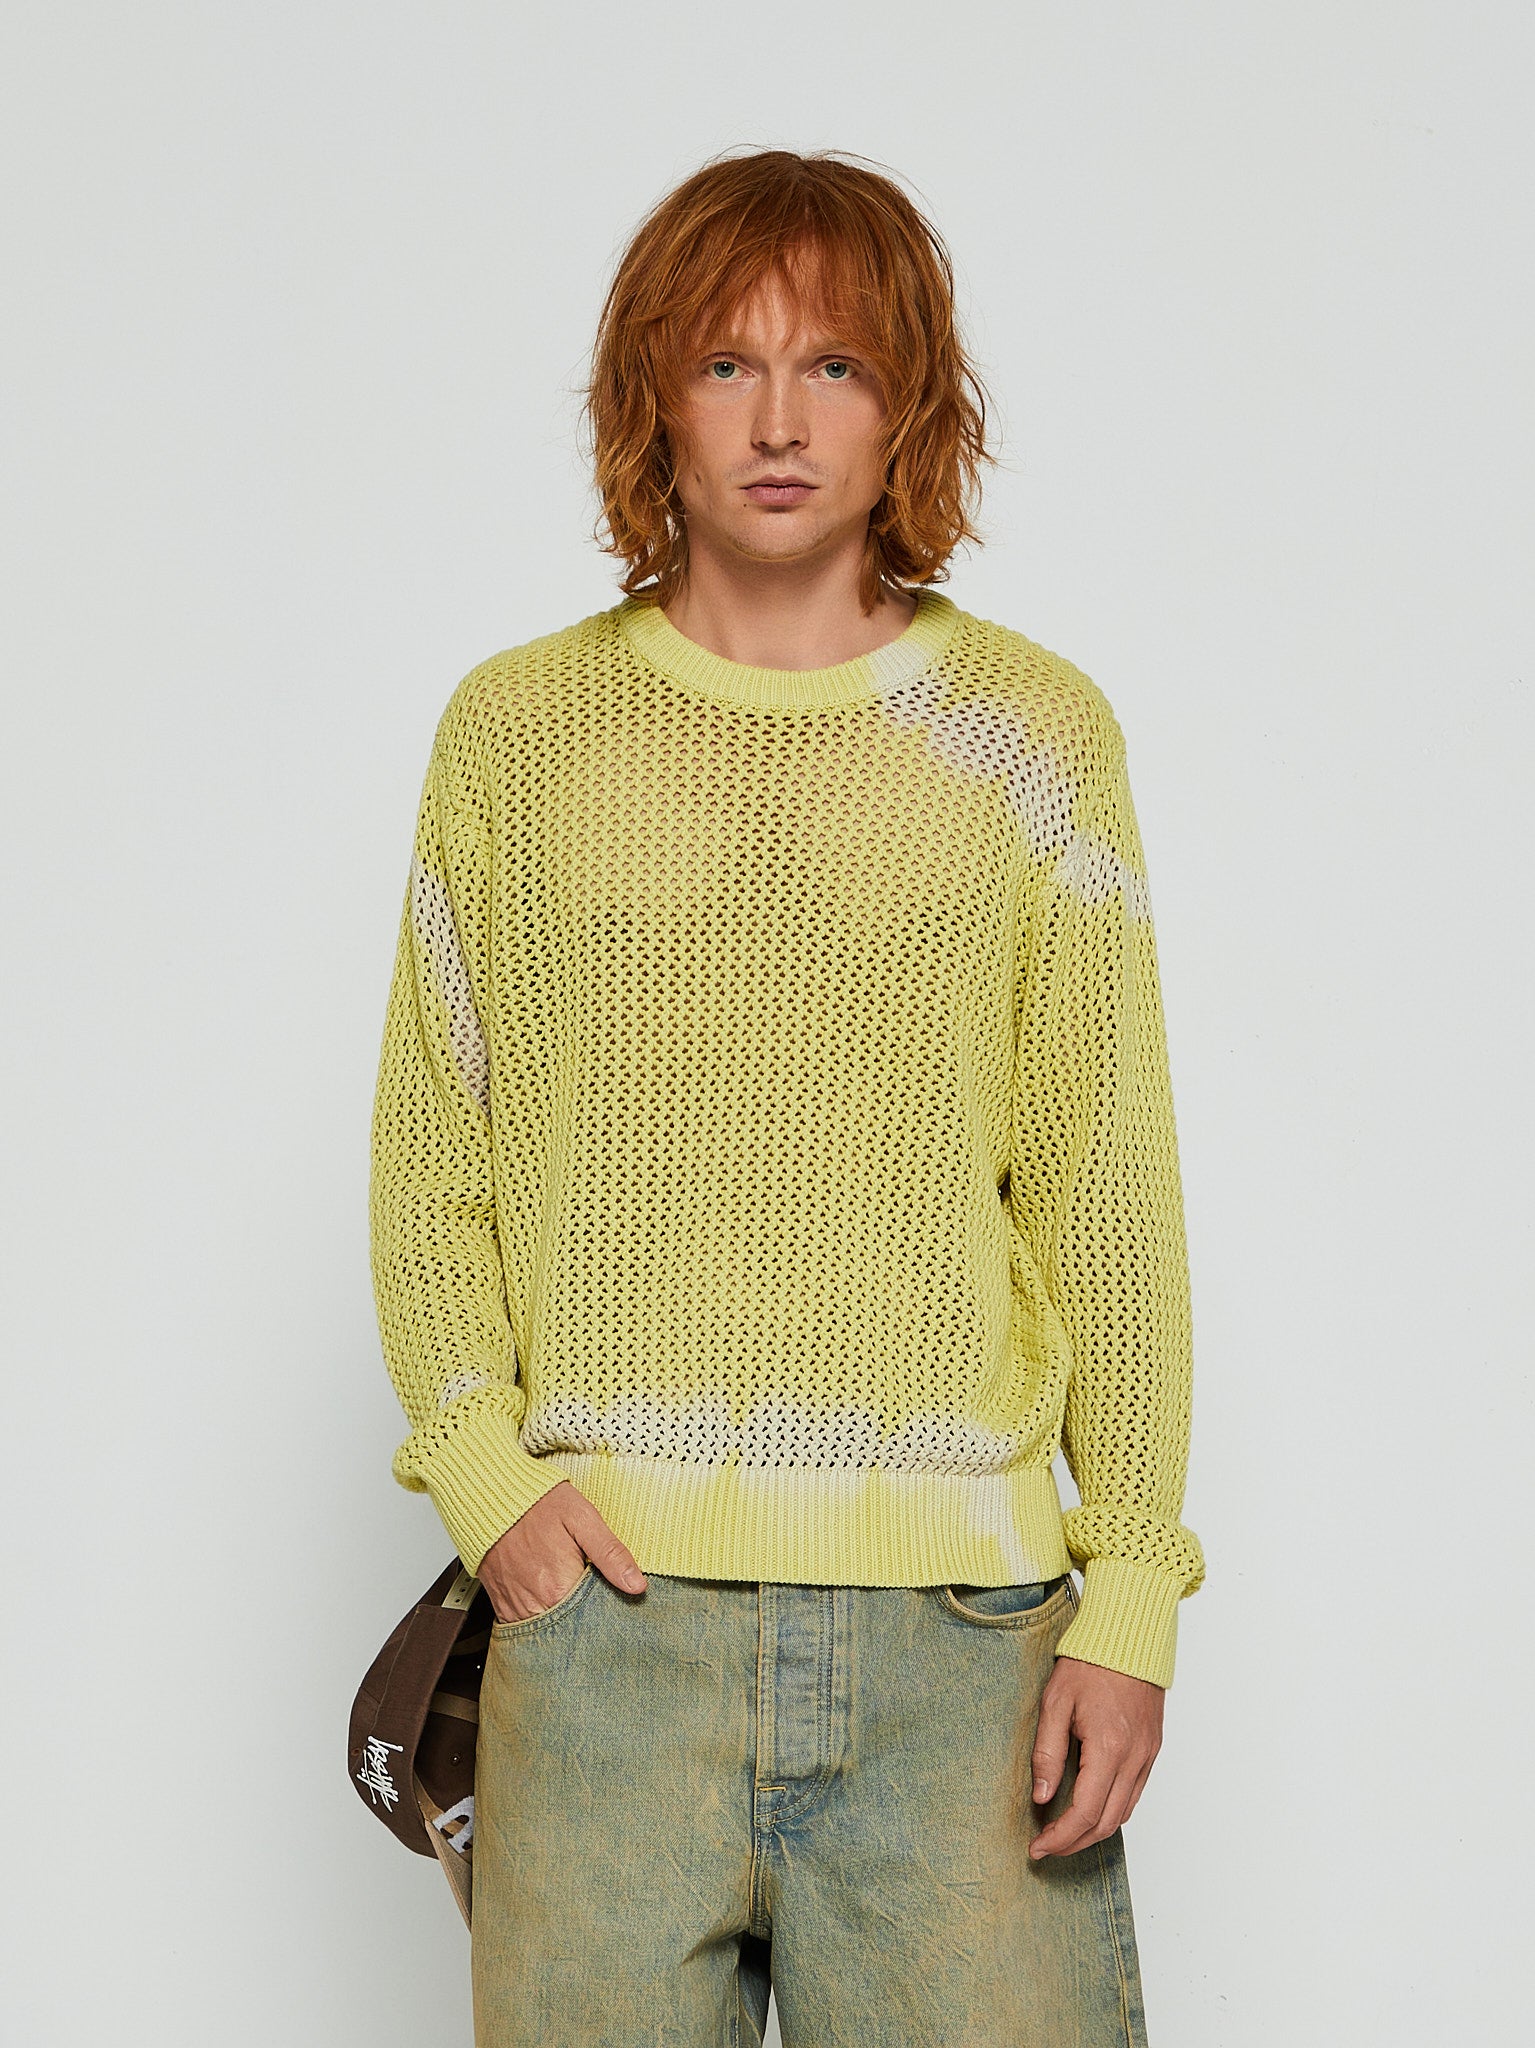 stüssy - Pigment Dyed Loose Gauge Sweater in Tie Dye Yellow